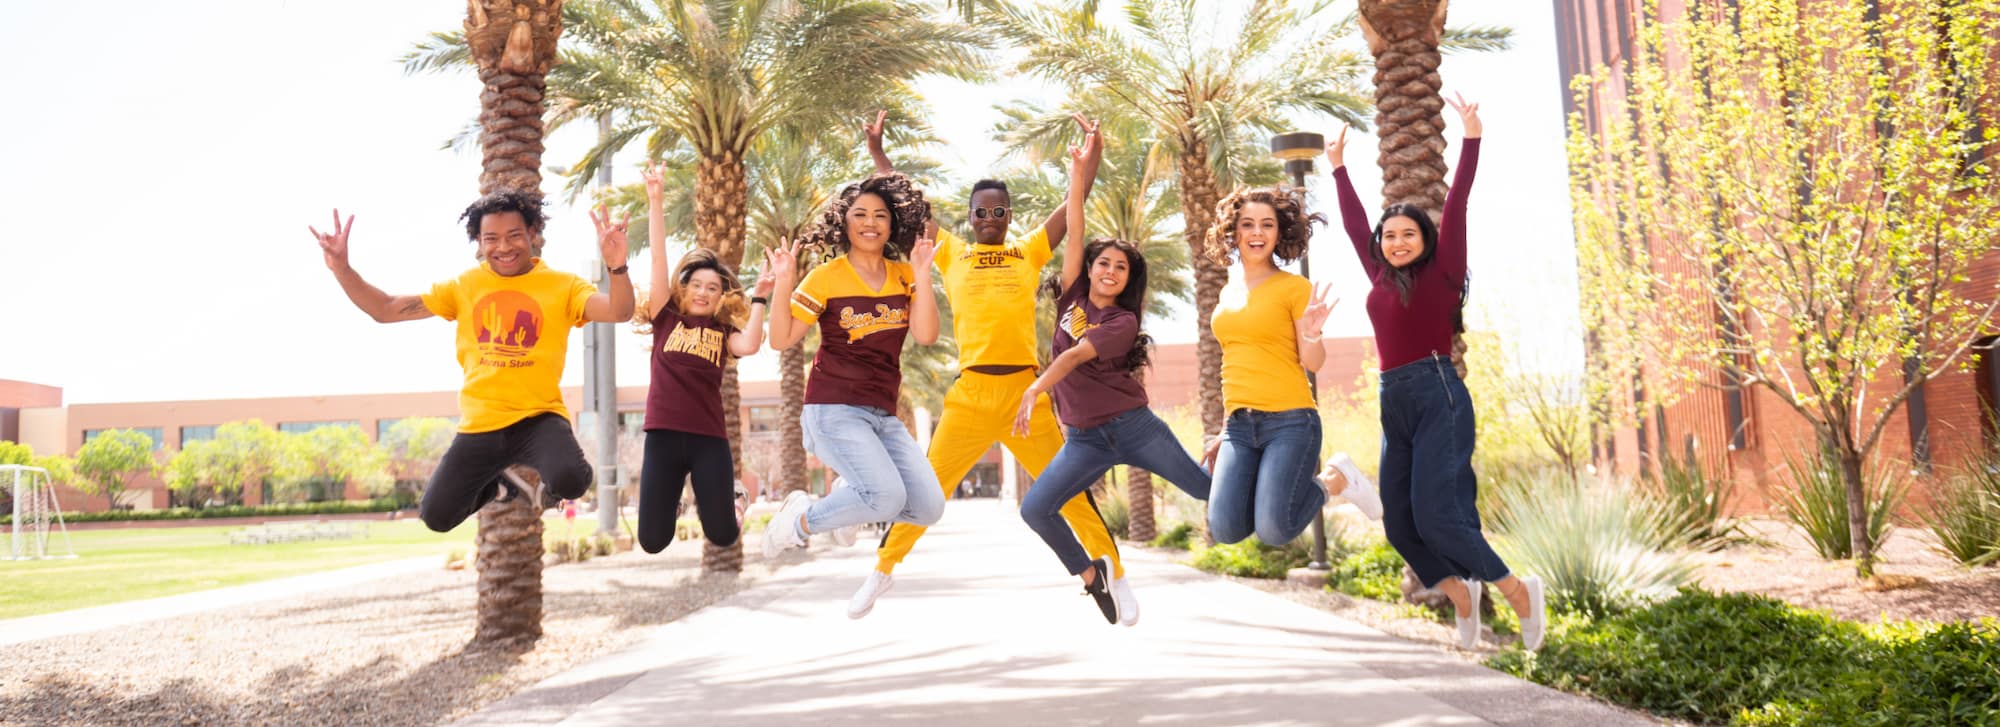 ASU students jumping for the camera